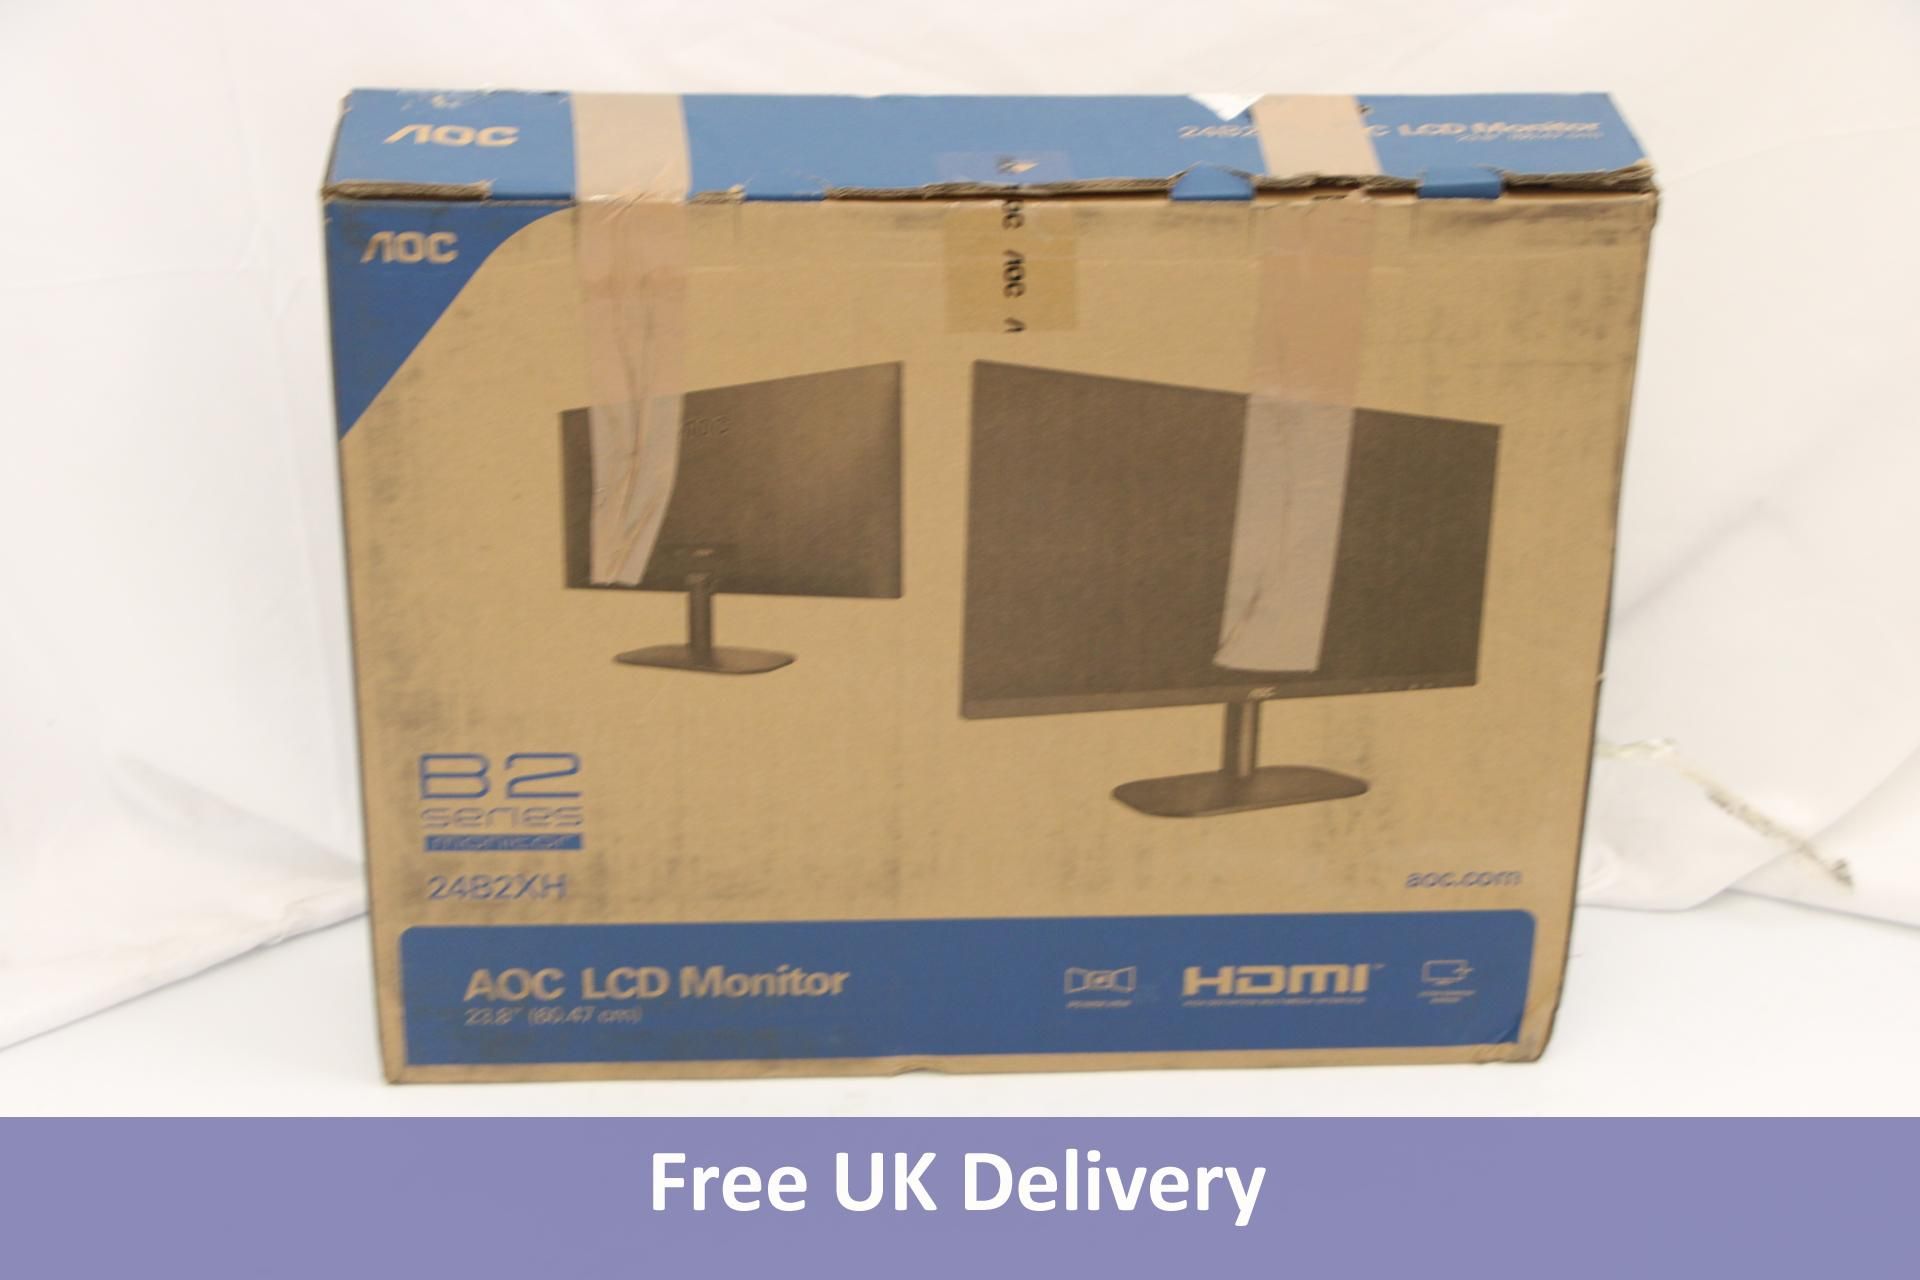 AOC B2 Series LCD Monitor, 23.8". Box damaged